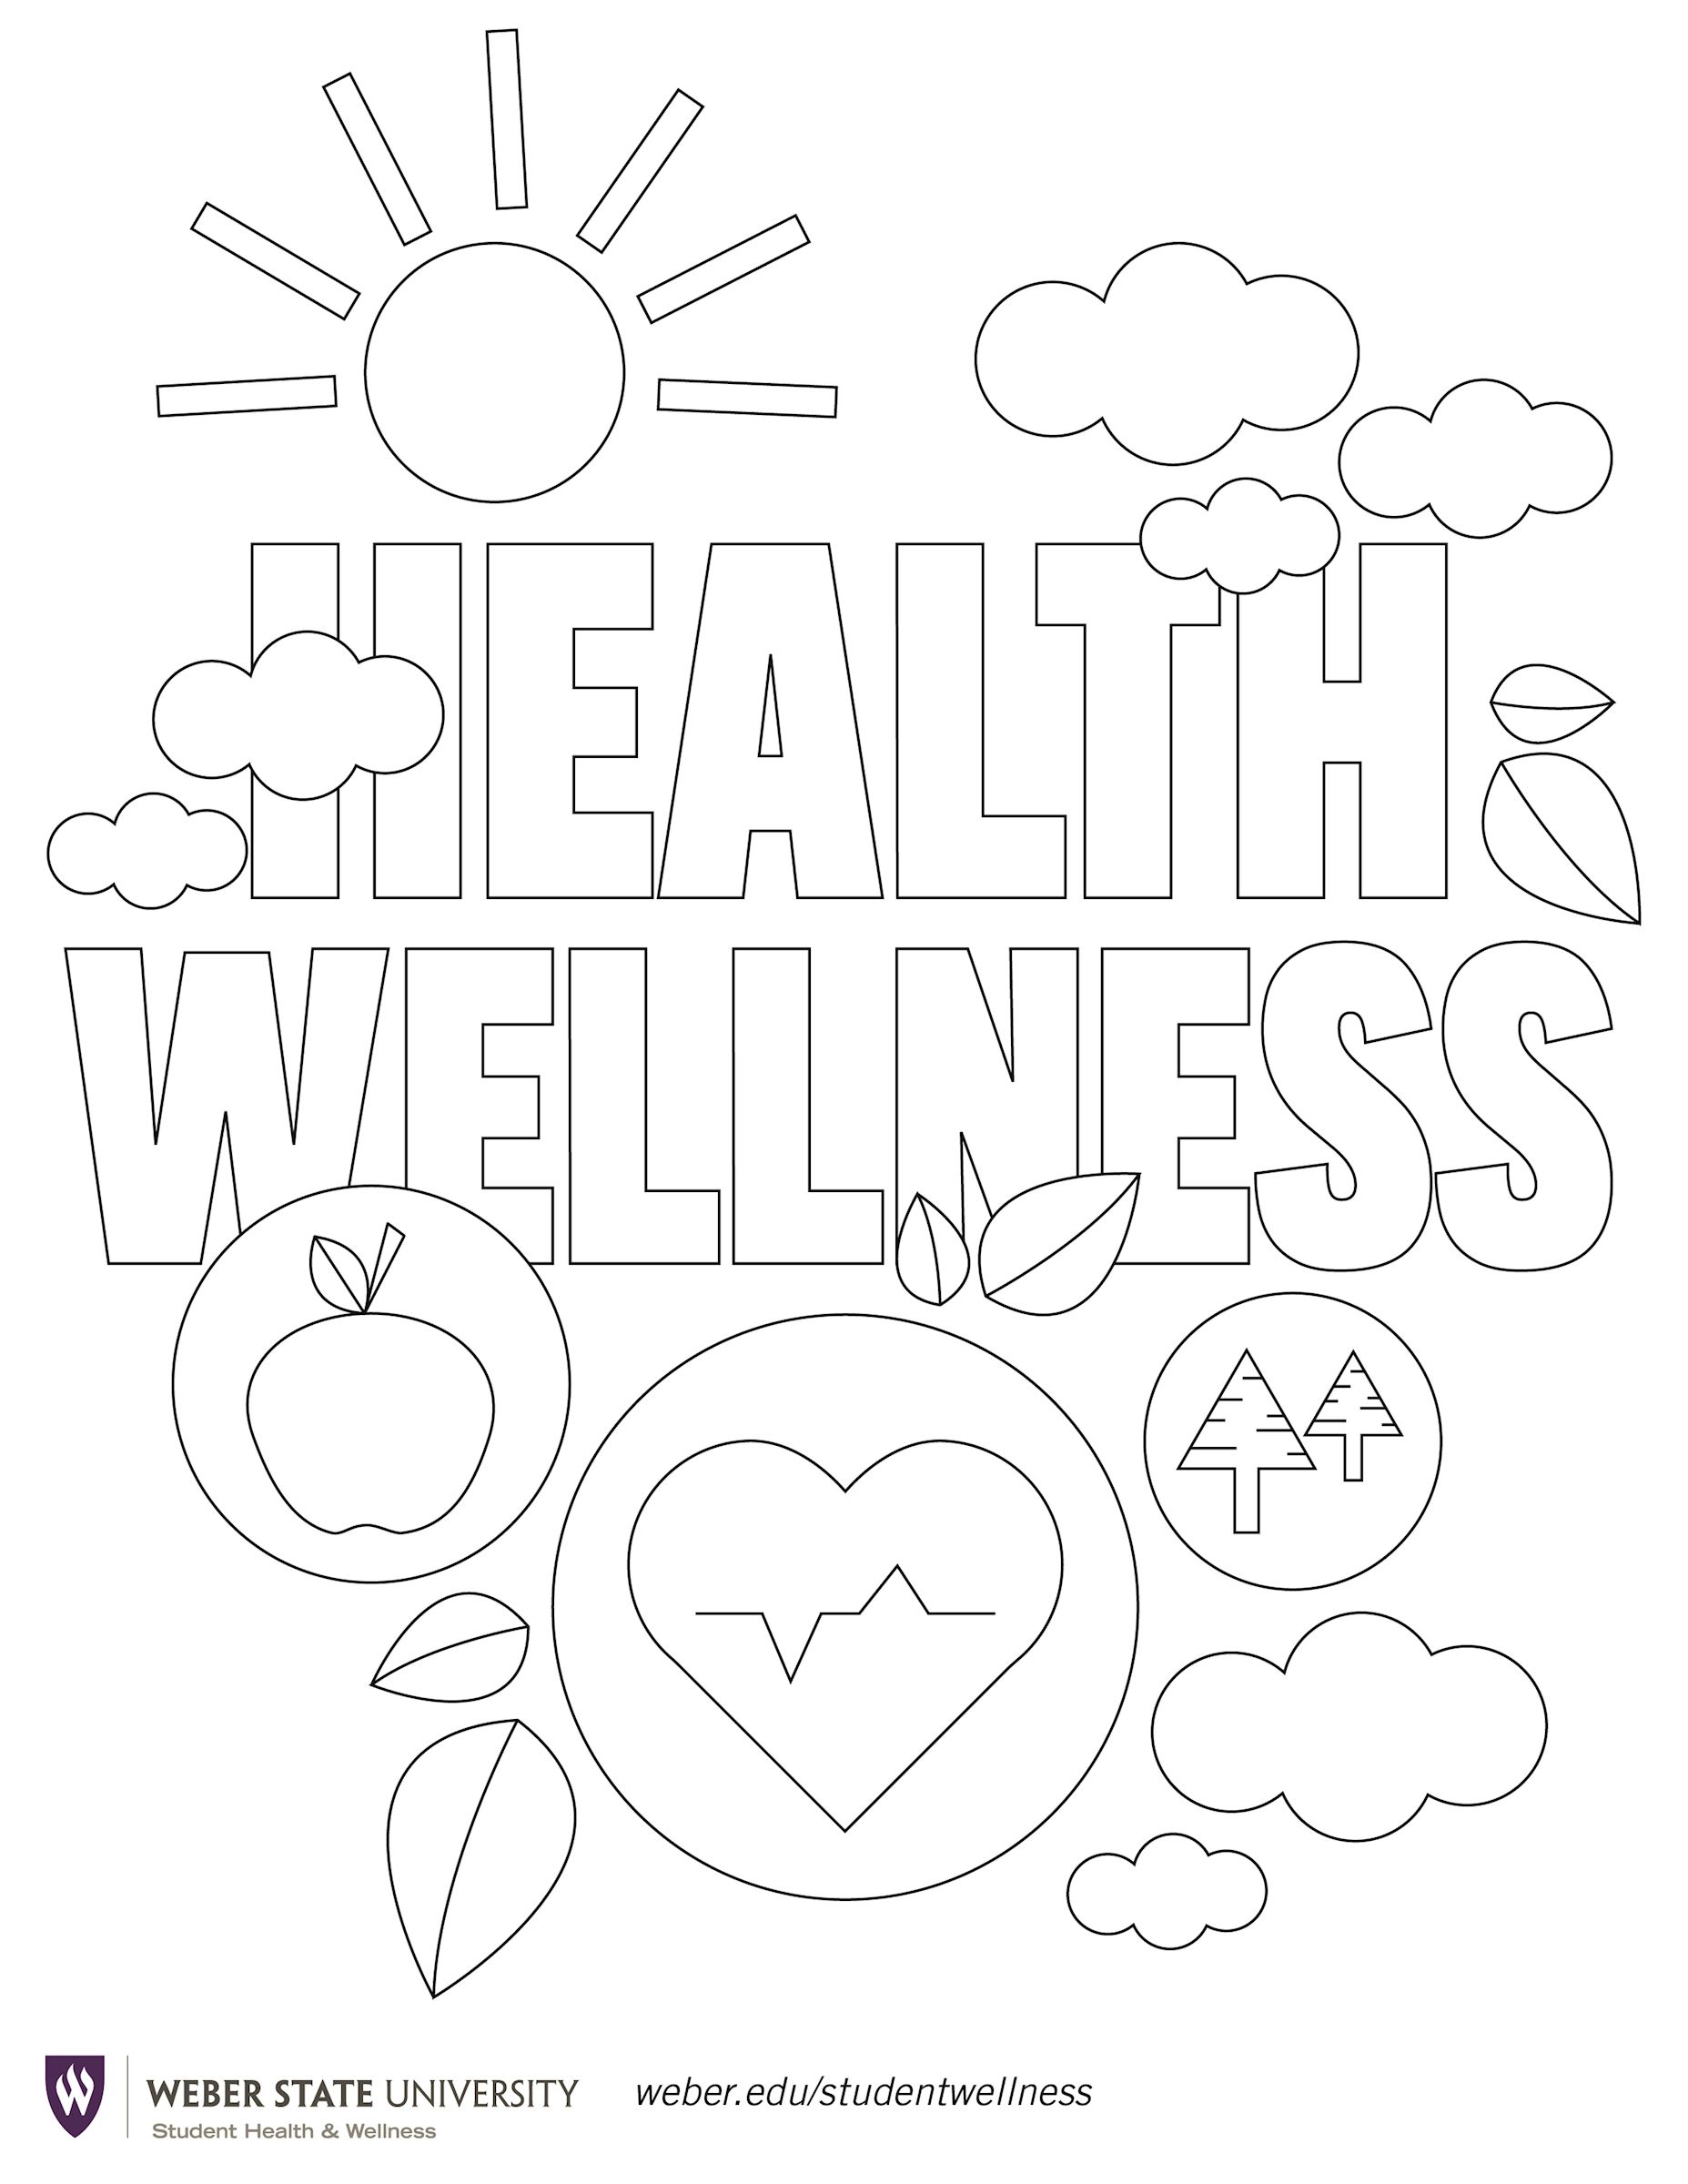 health wellness